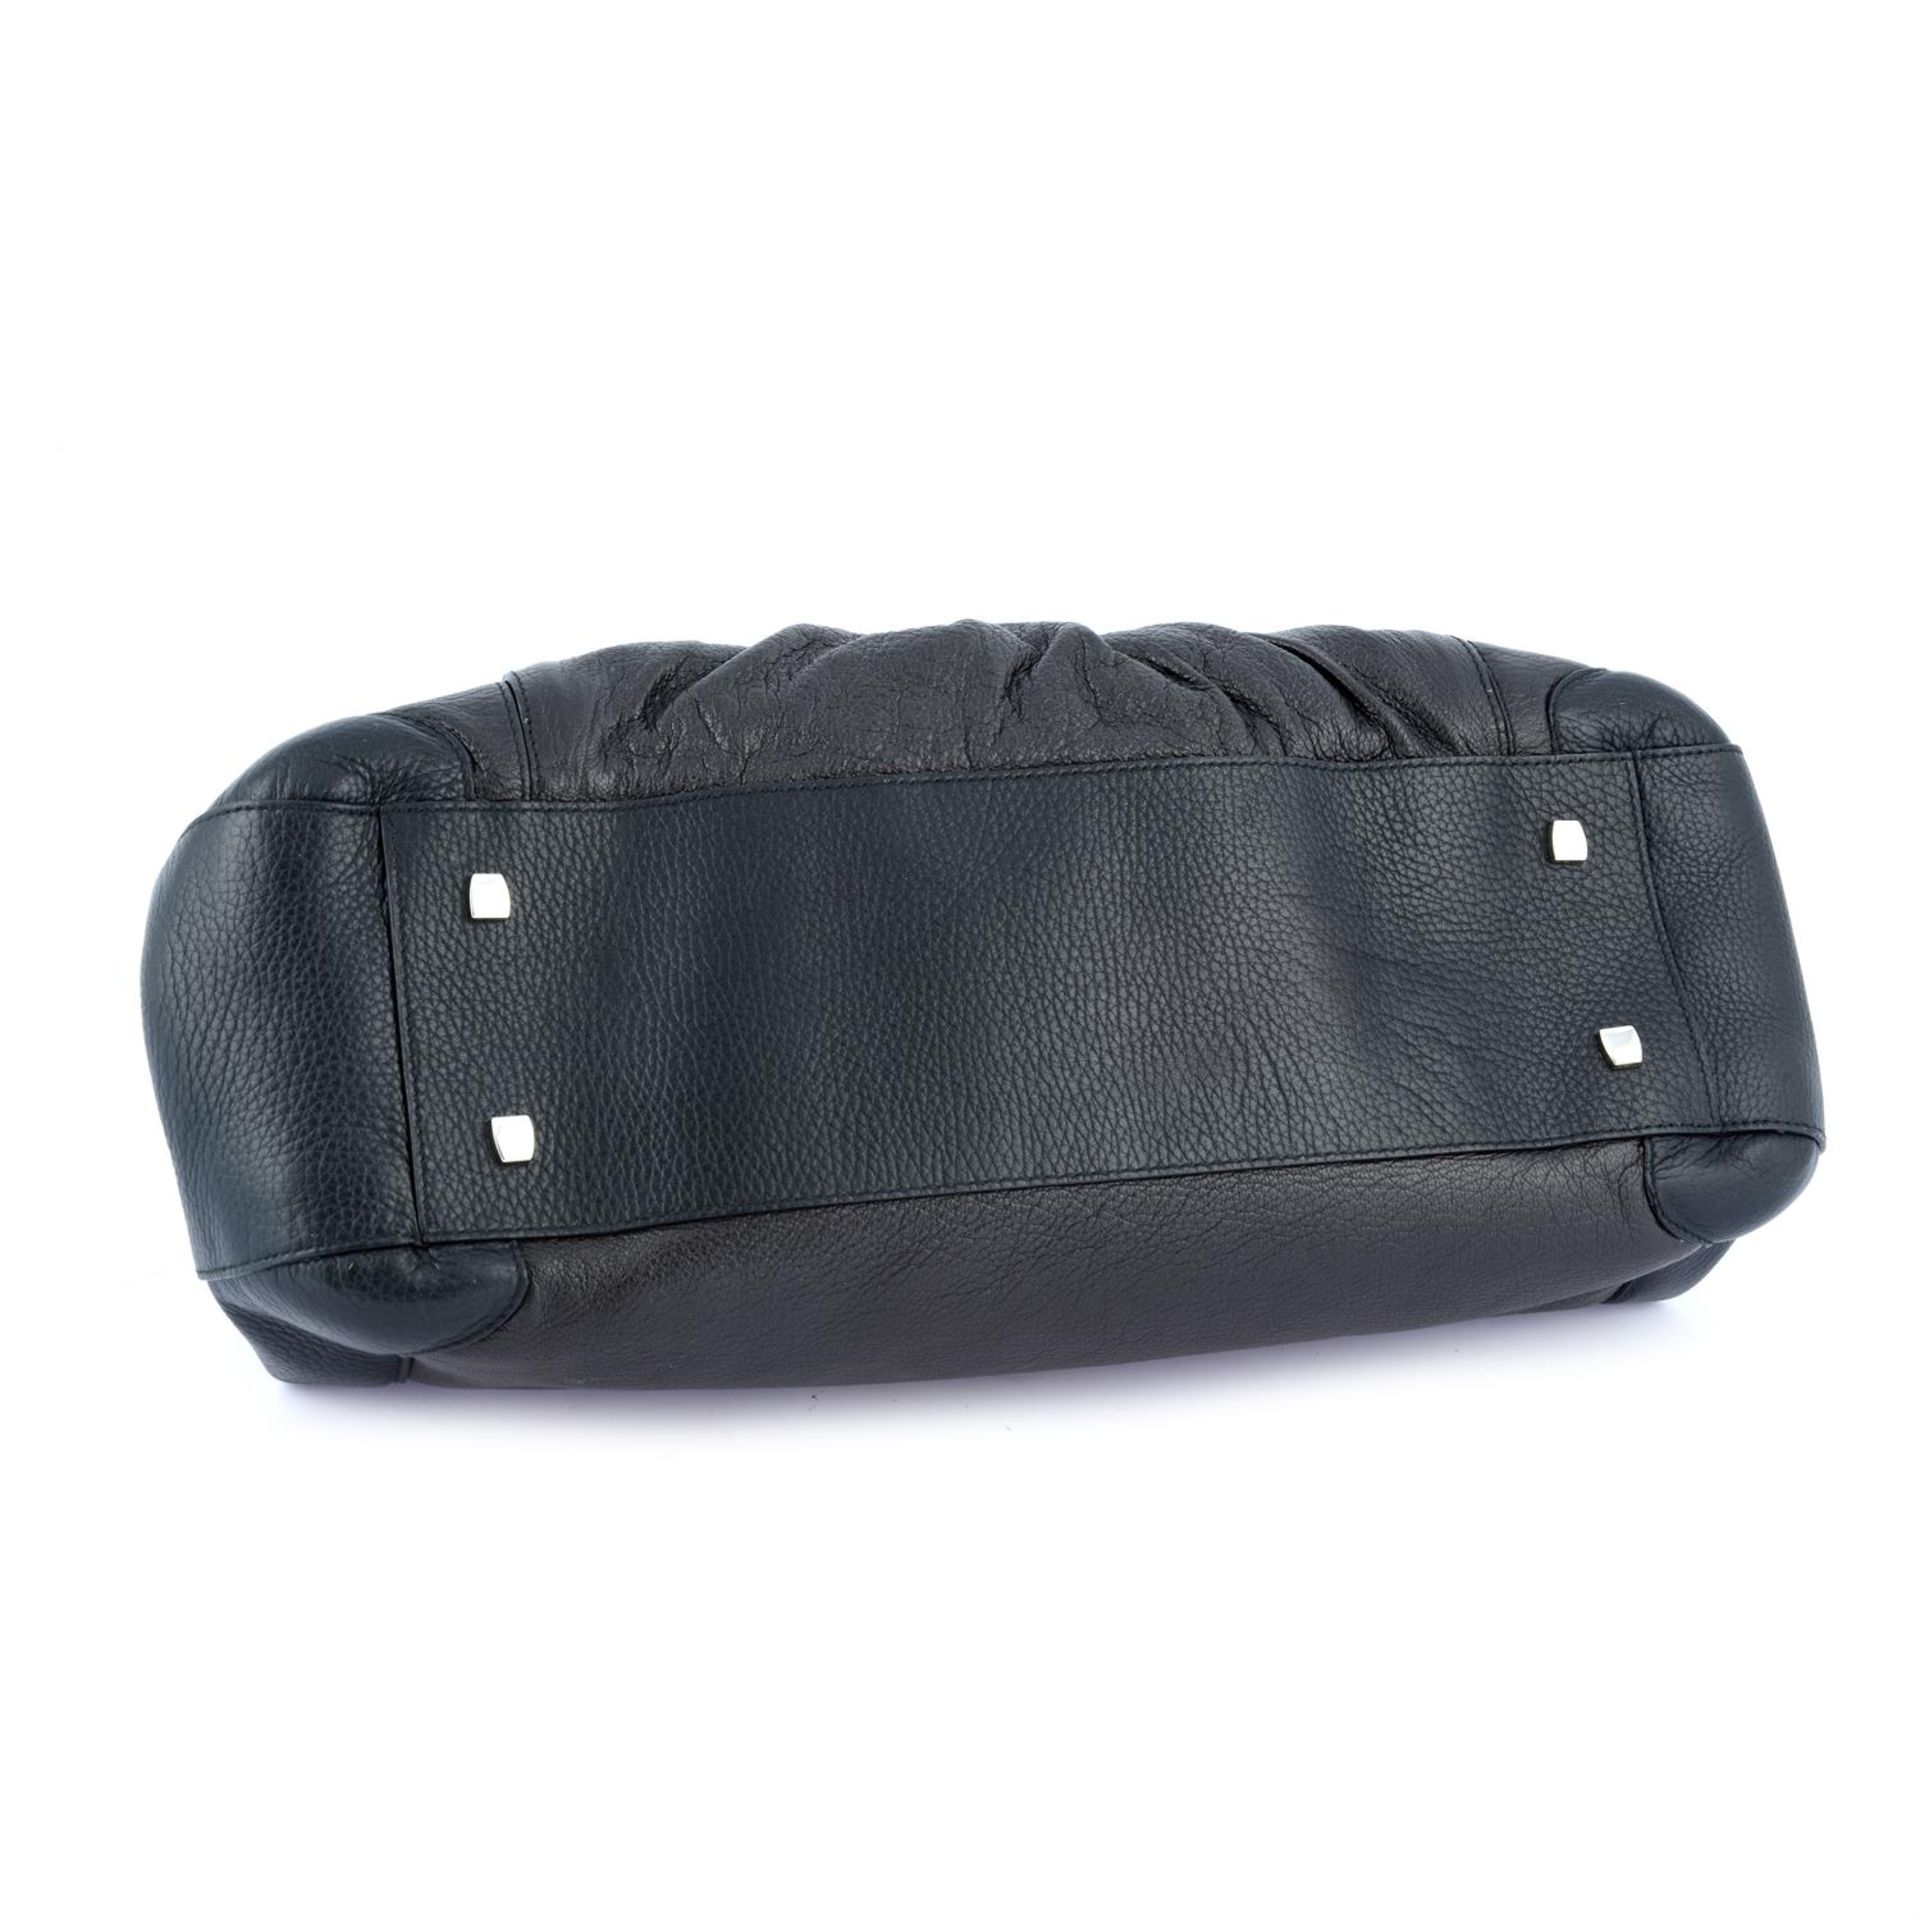 CARTIER - a black leather Multi-Pocket handbag.m - Image 4 of 4